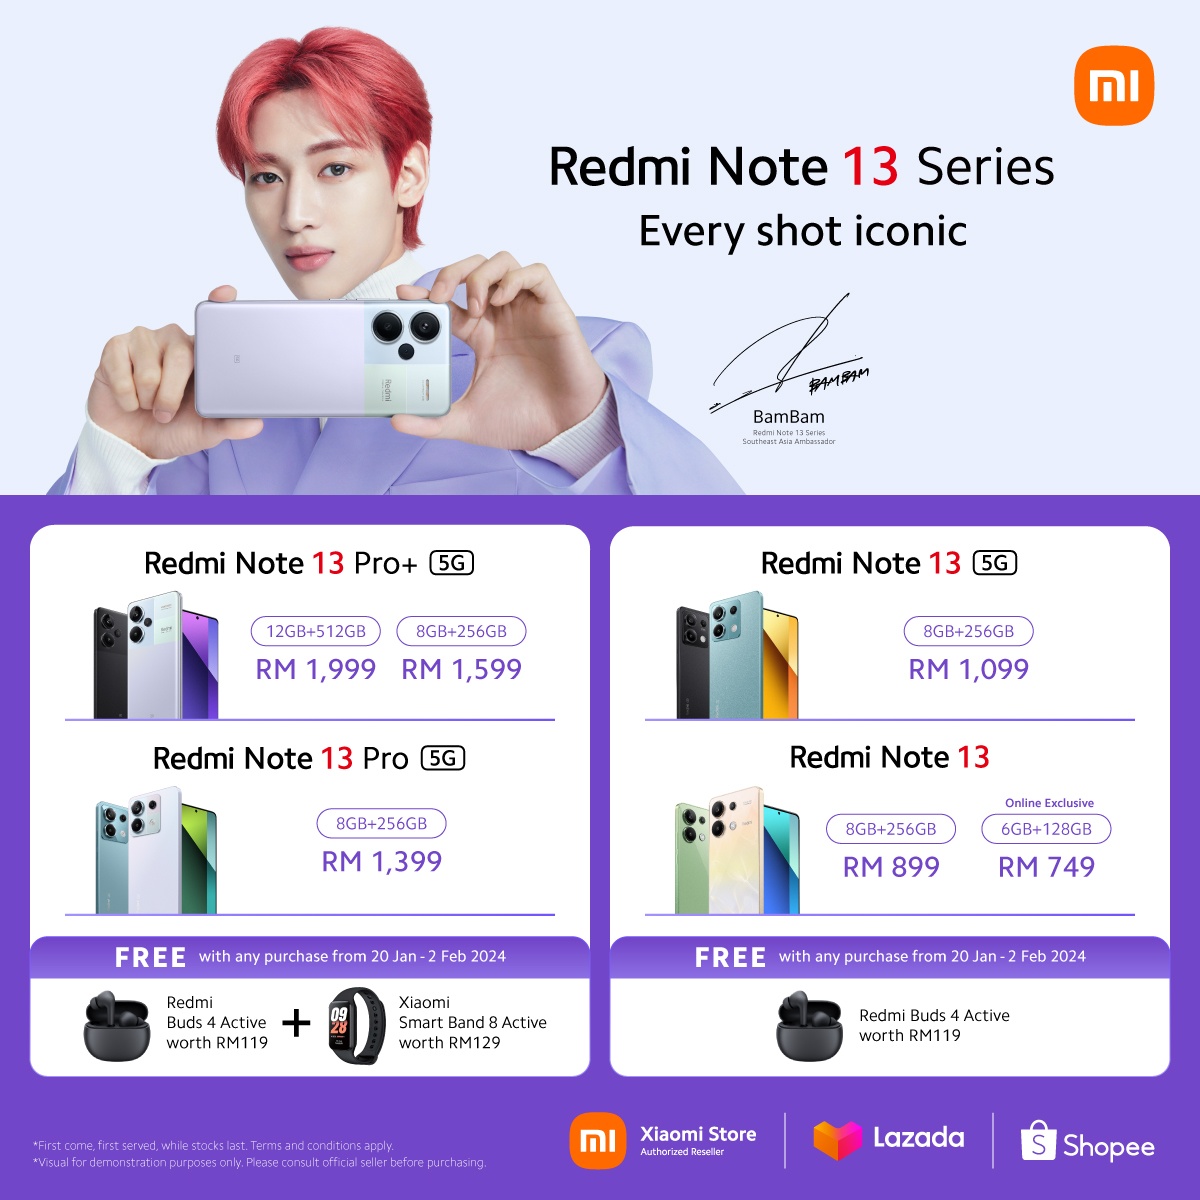 Xiaomi Redmi Note 13 Series Iconic